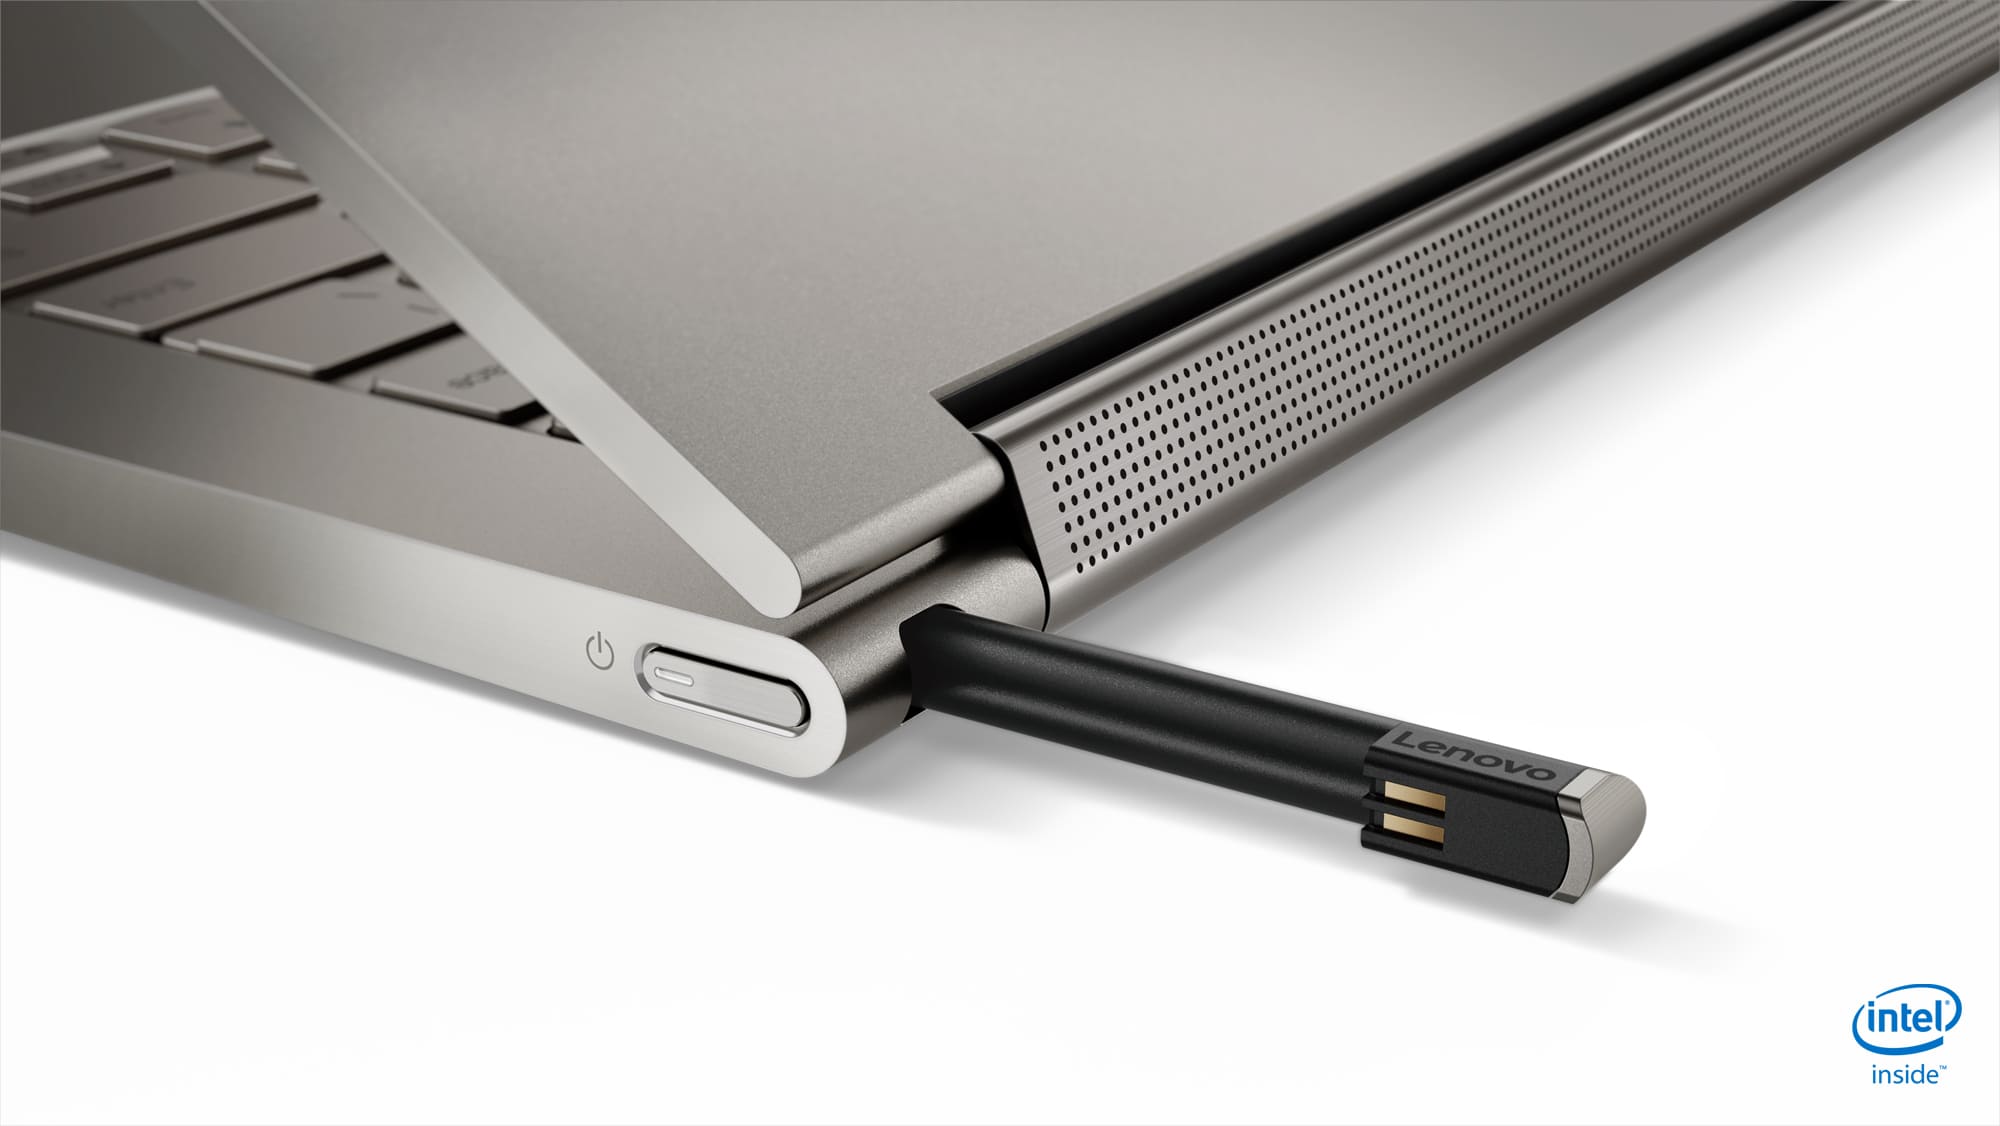 Lenovo Yoga C930 laptop biến hình đột phá